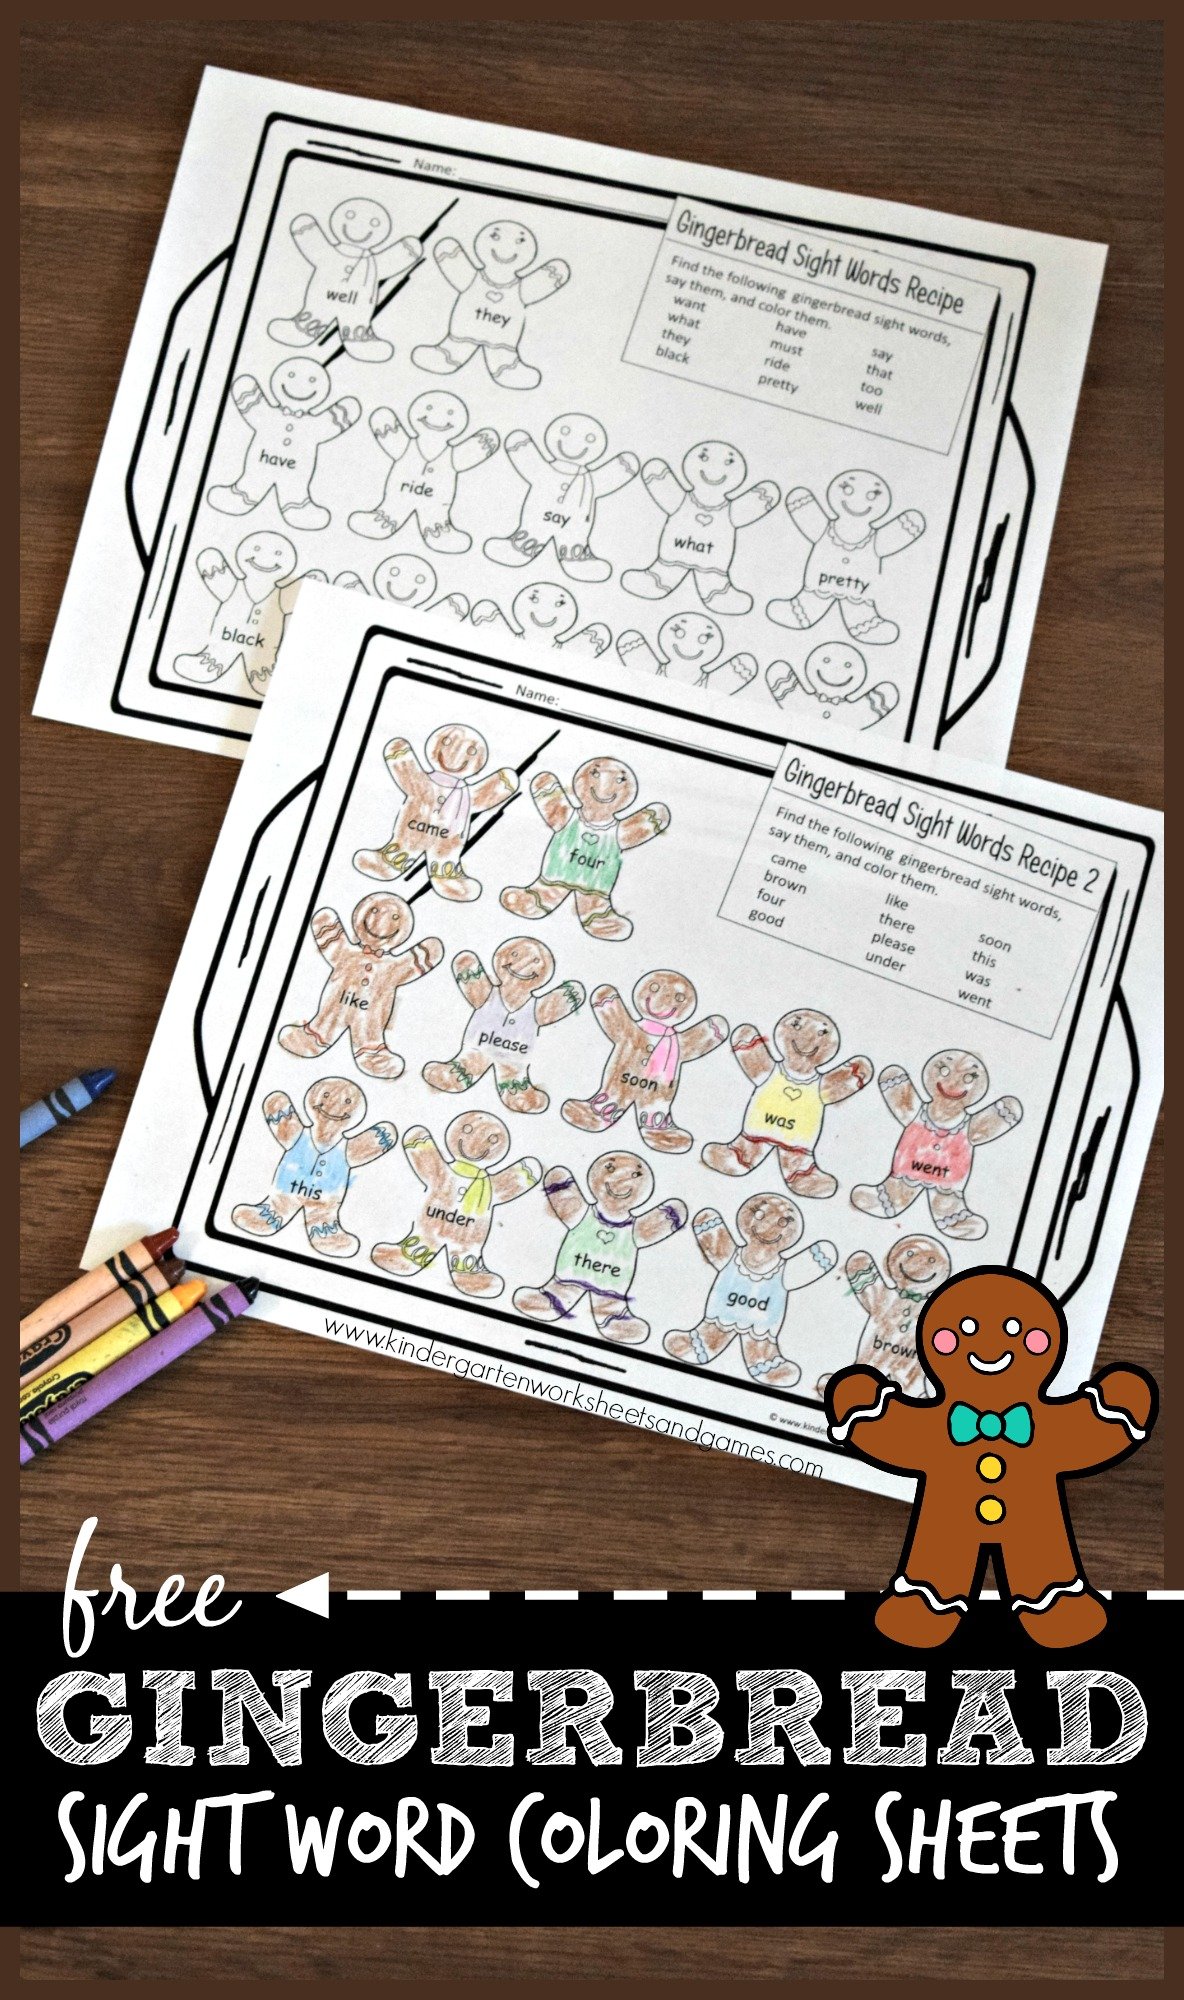 Gingerbread sight words worksheets